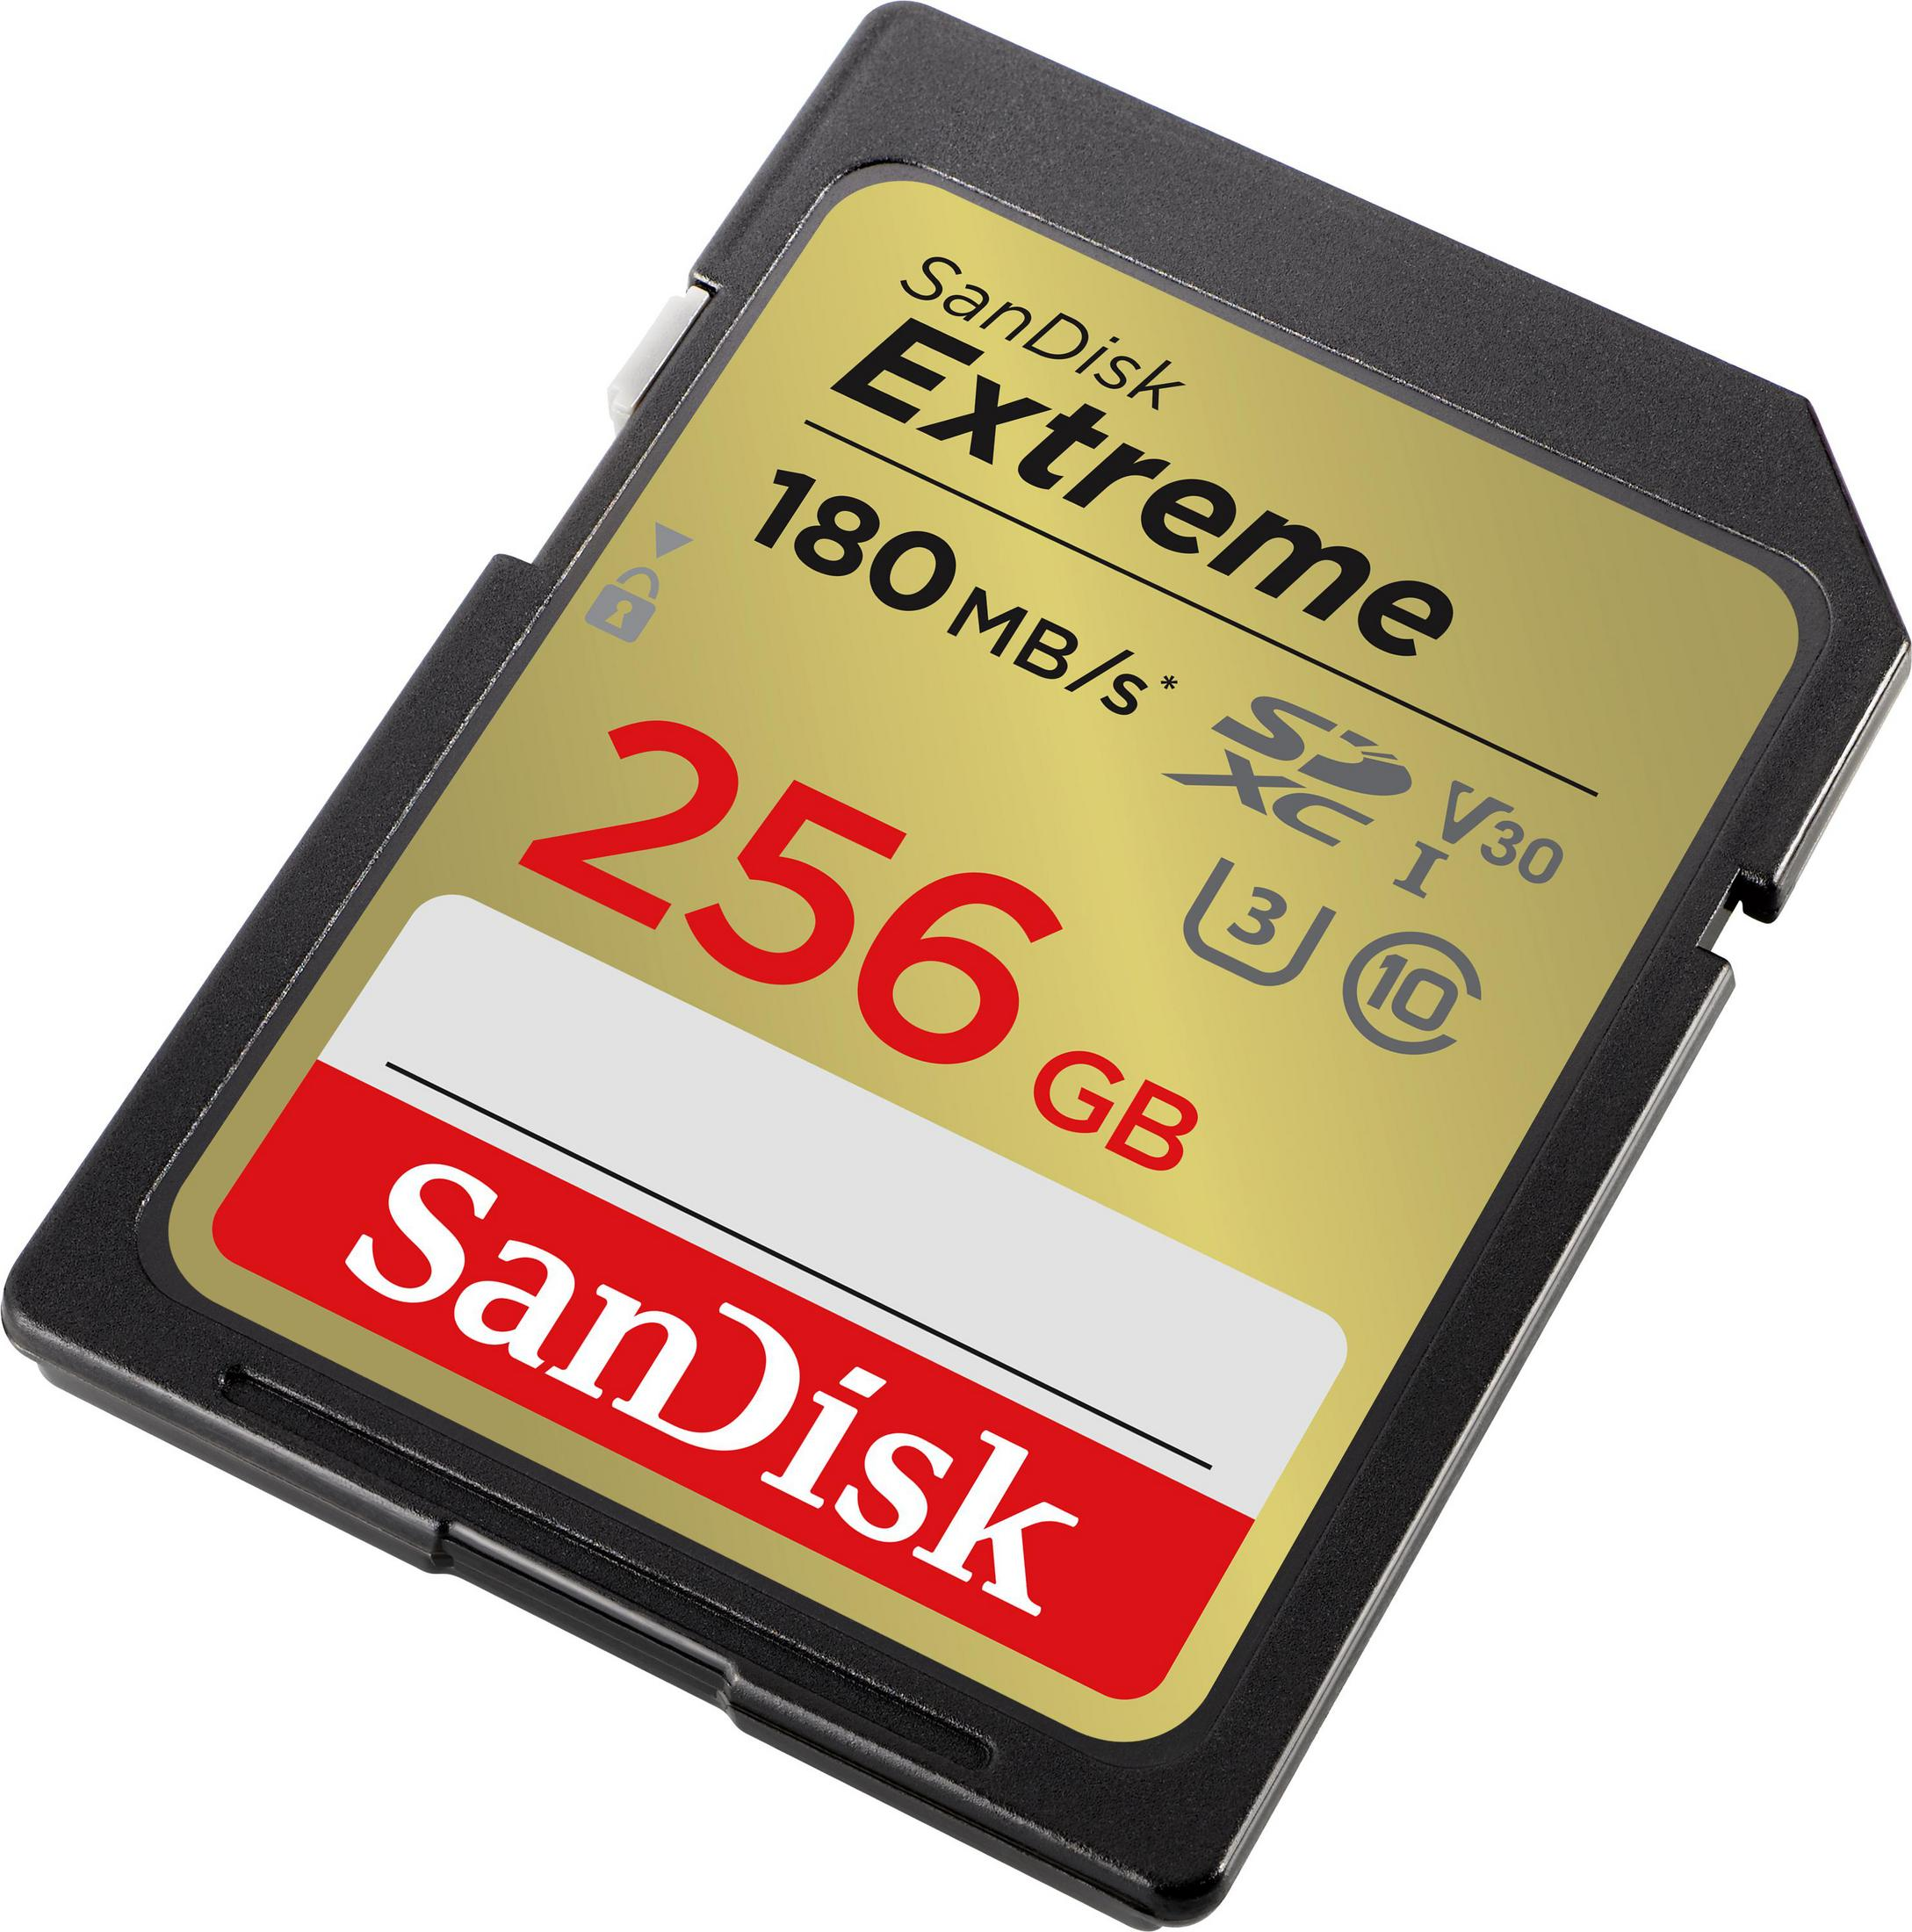 SDSDXVV-256G-GNCIN MB/s SDXC 256GB SANDISK 256 EX. 1, GB, SDXC Speicherkarte, 180